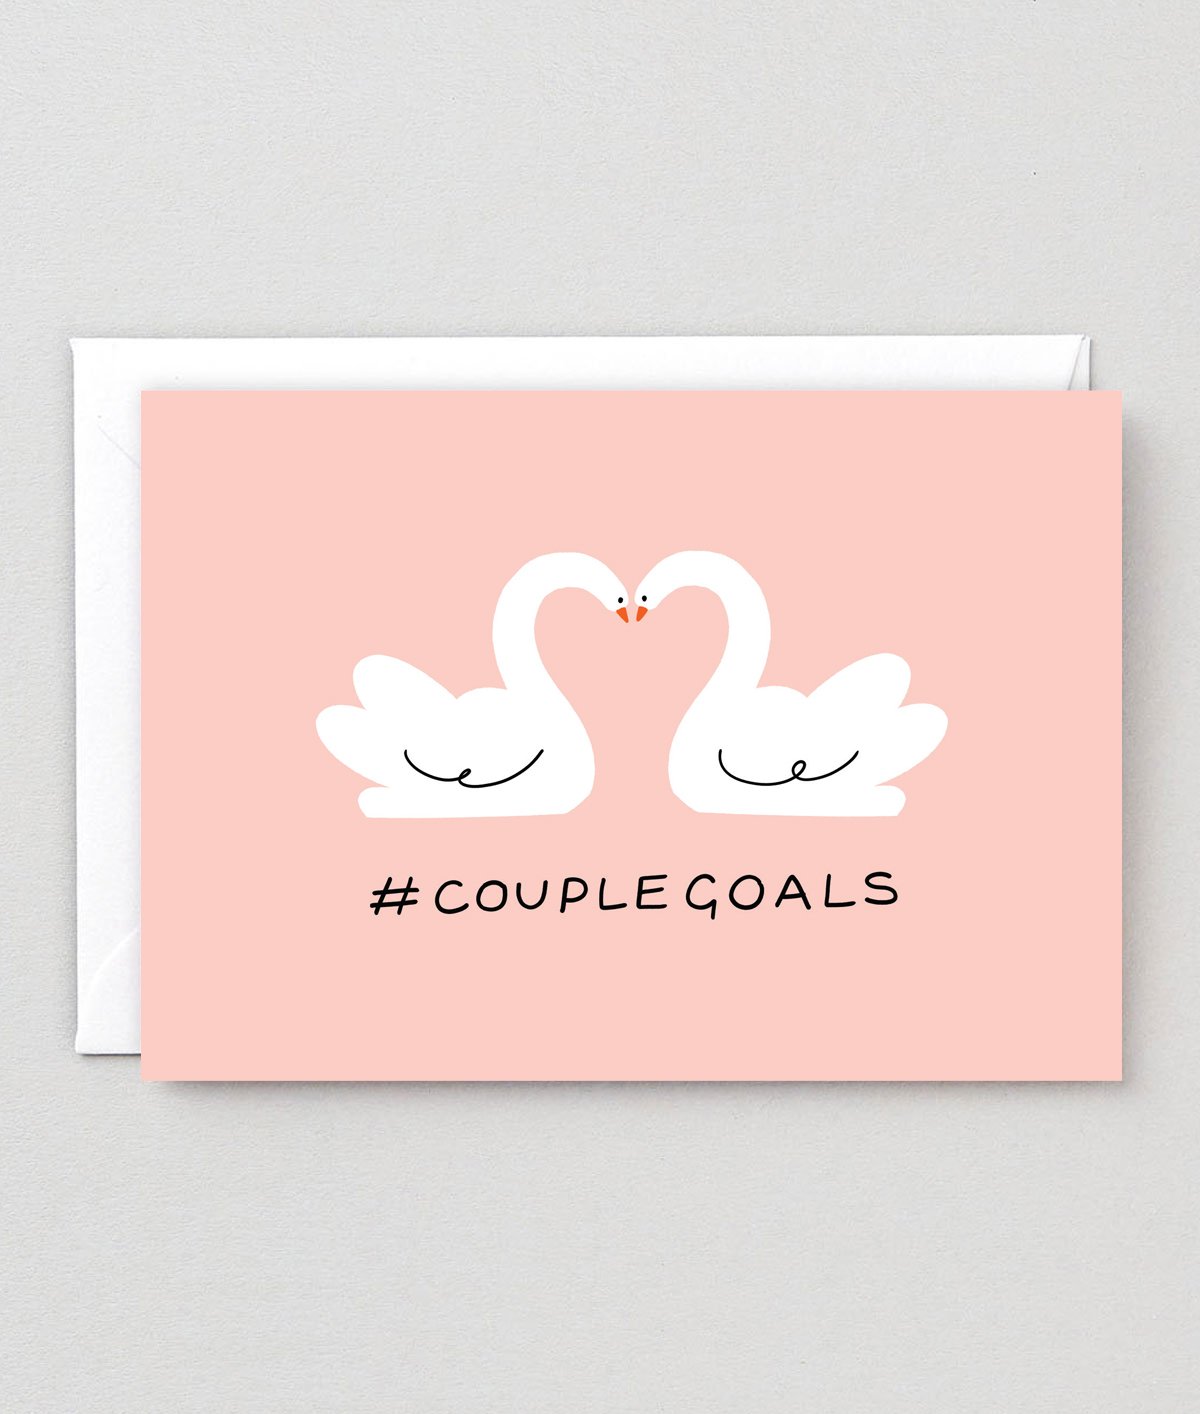 Couple Goals